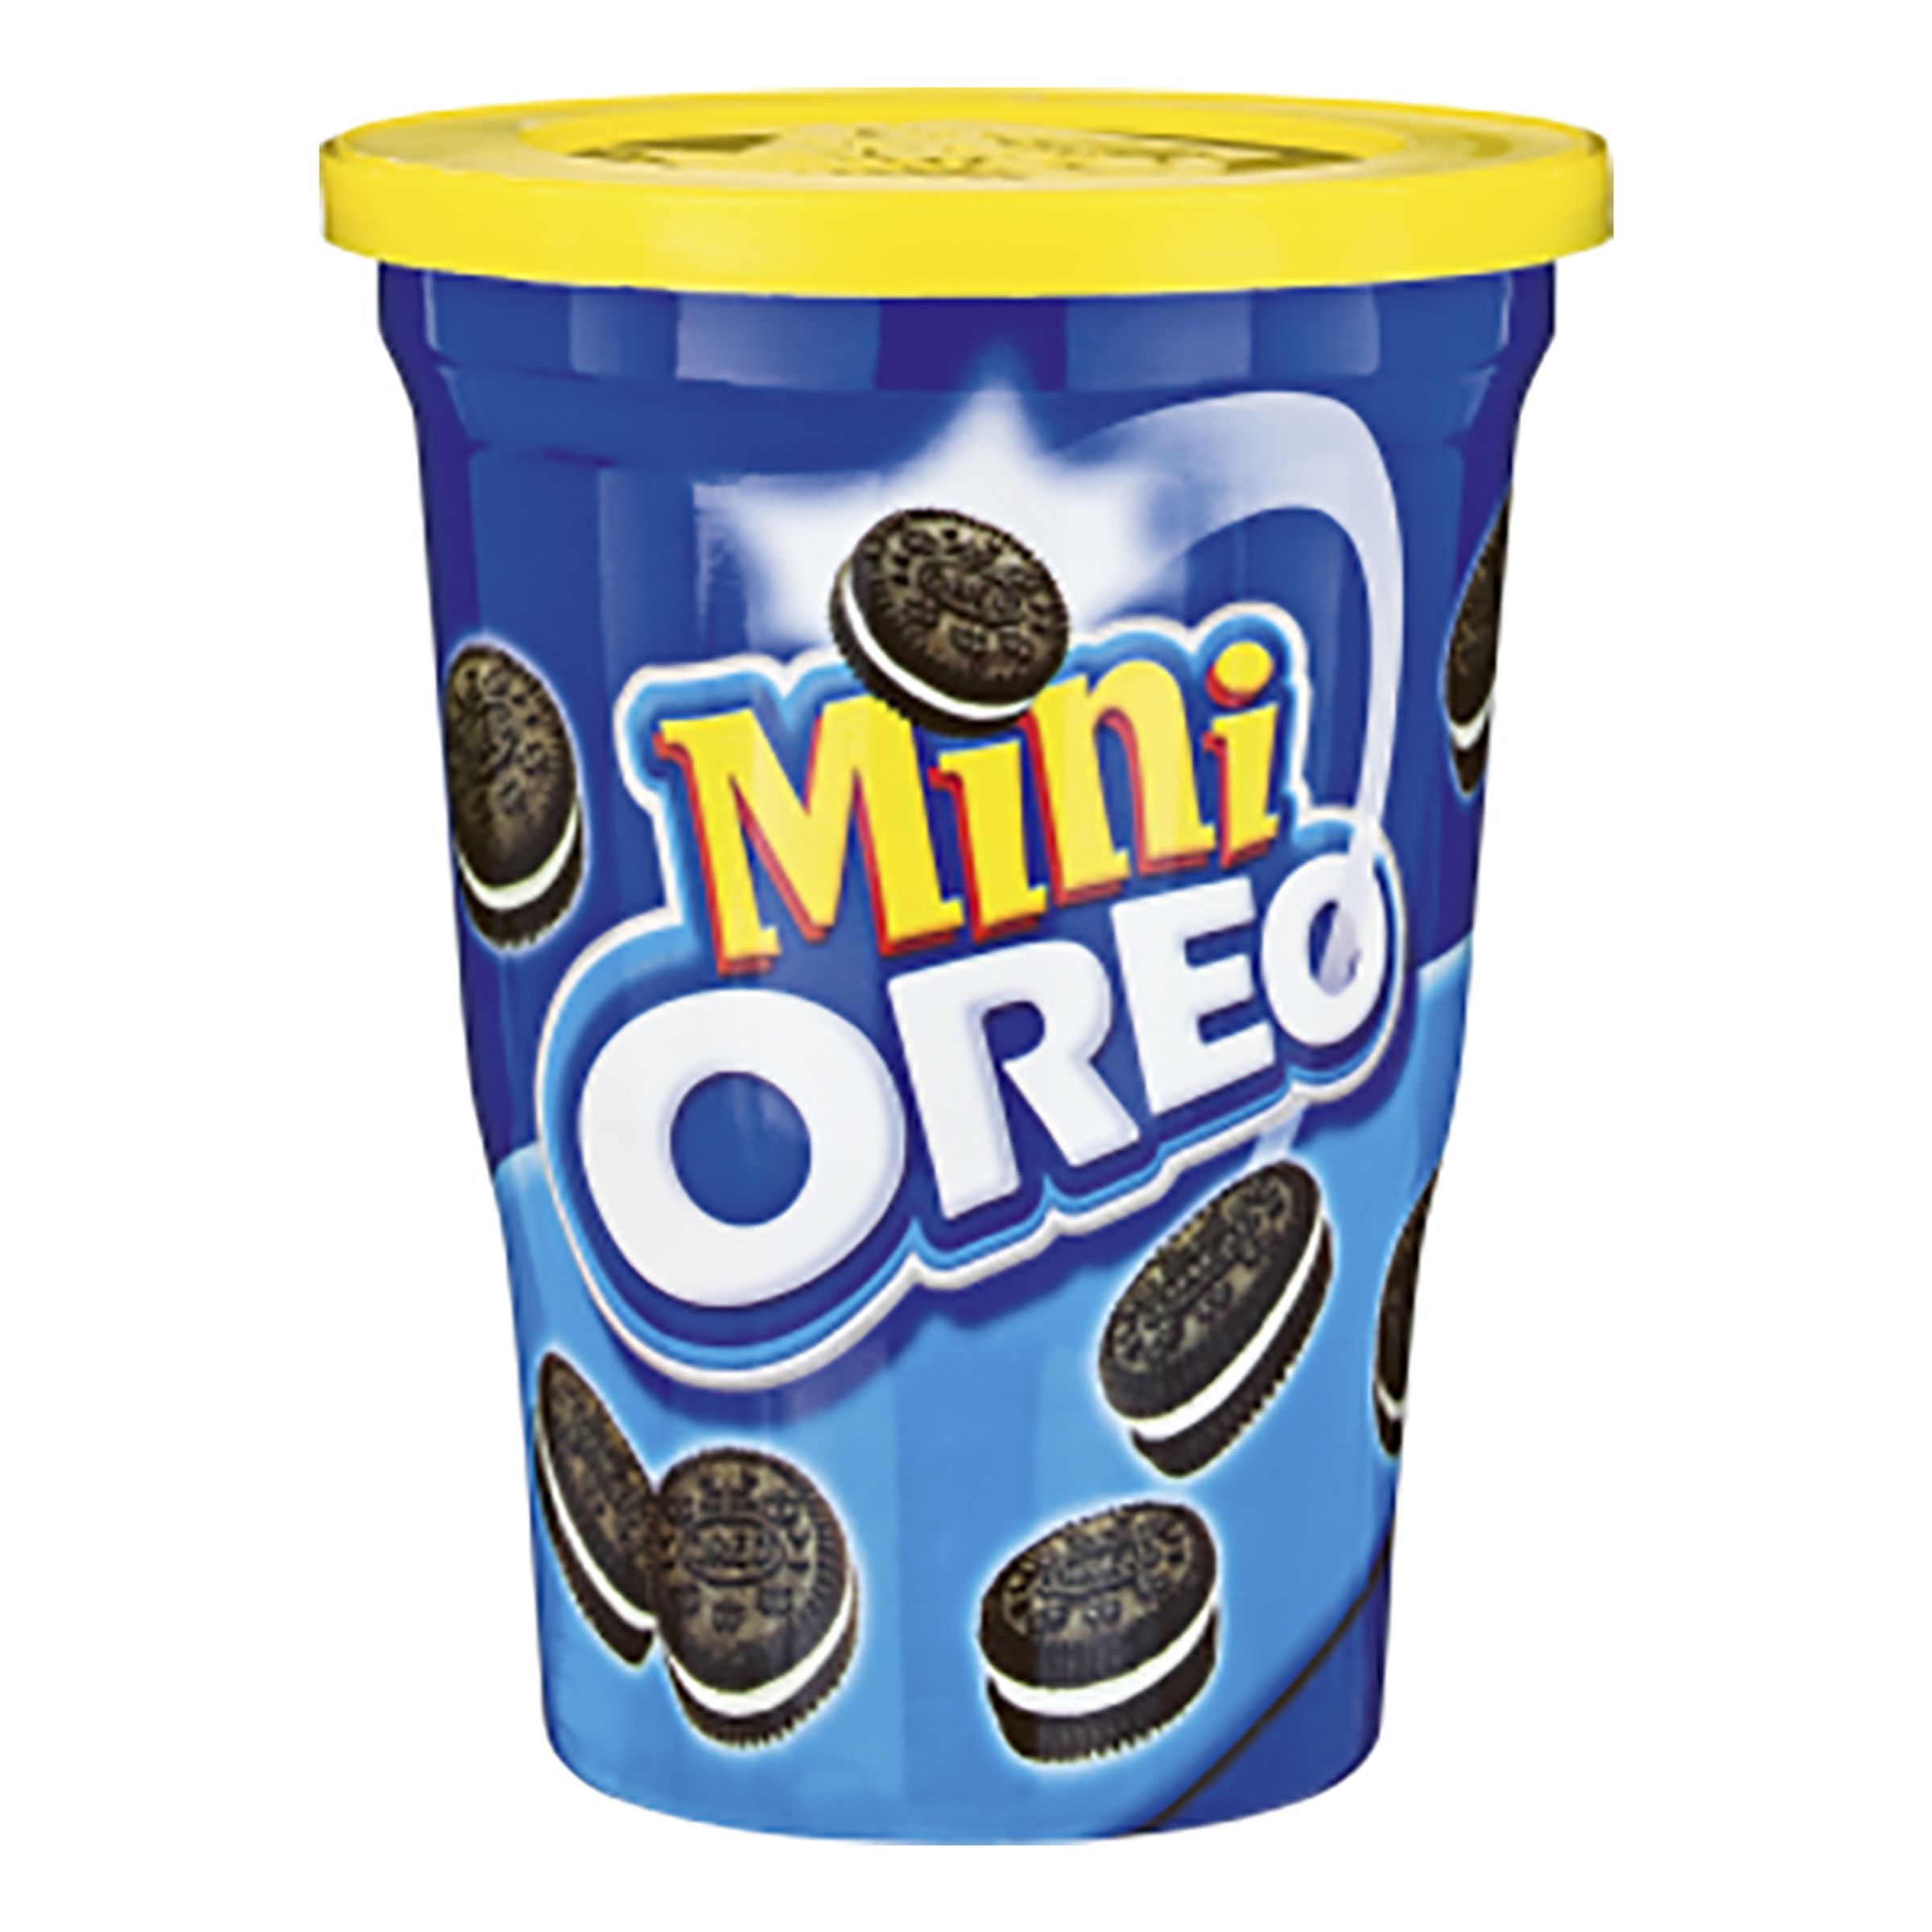 Oreo Cookies Mini - 115 gram